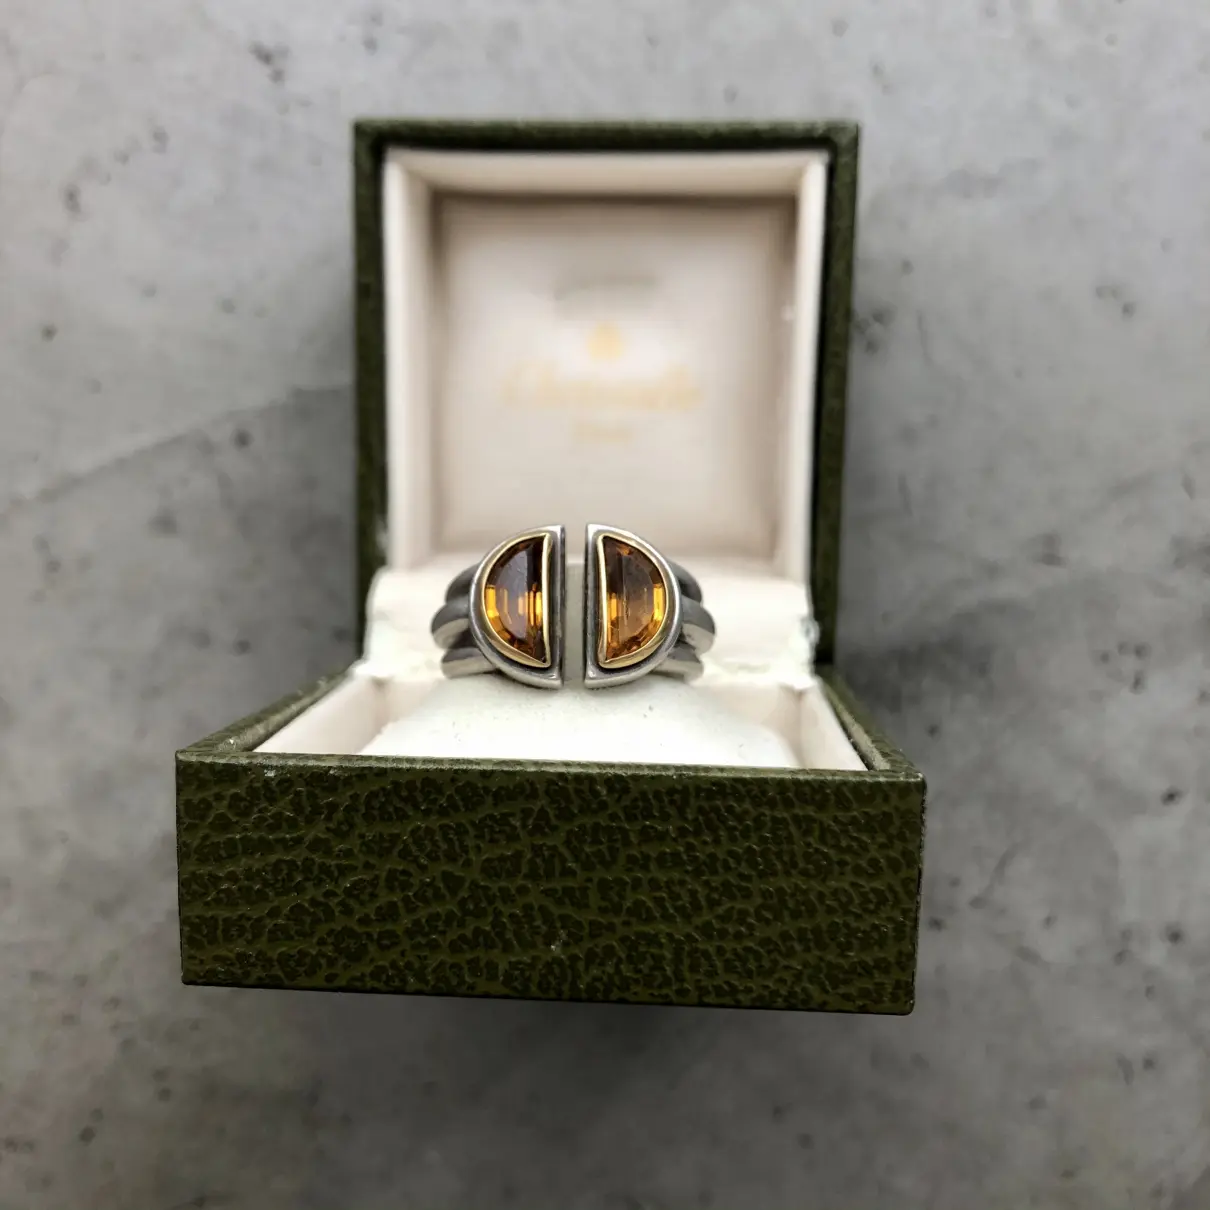 Buy Christofle White gold ring online